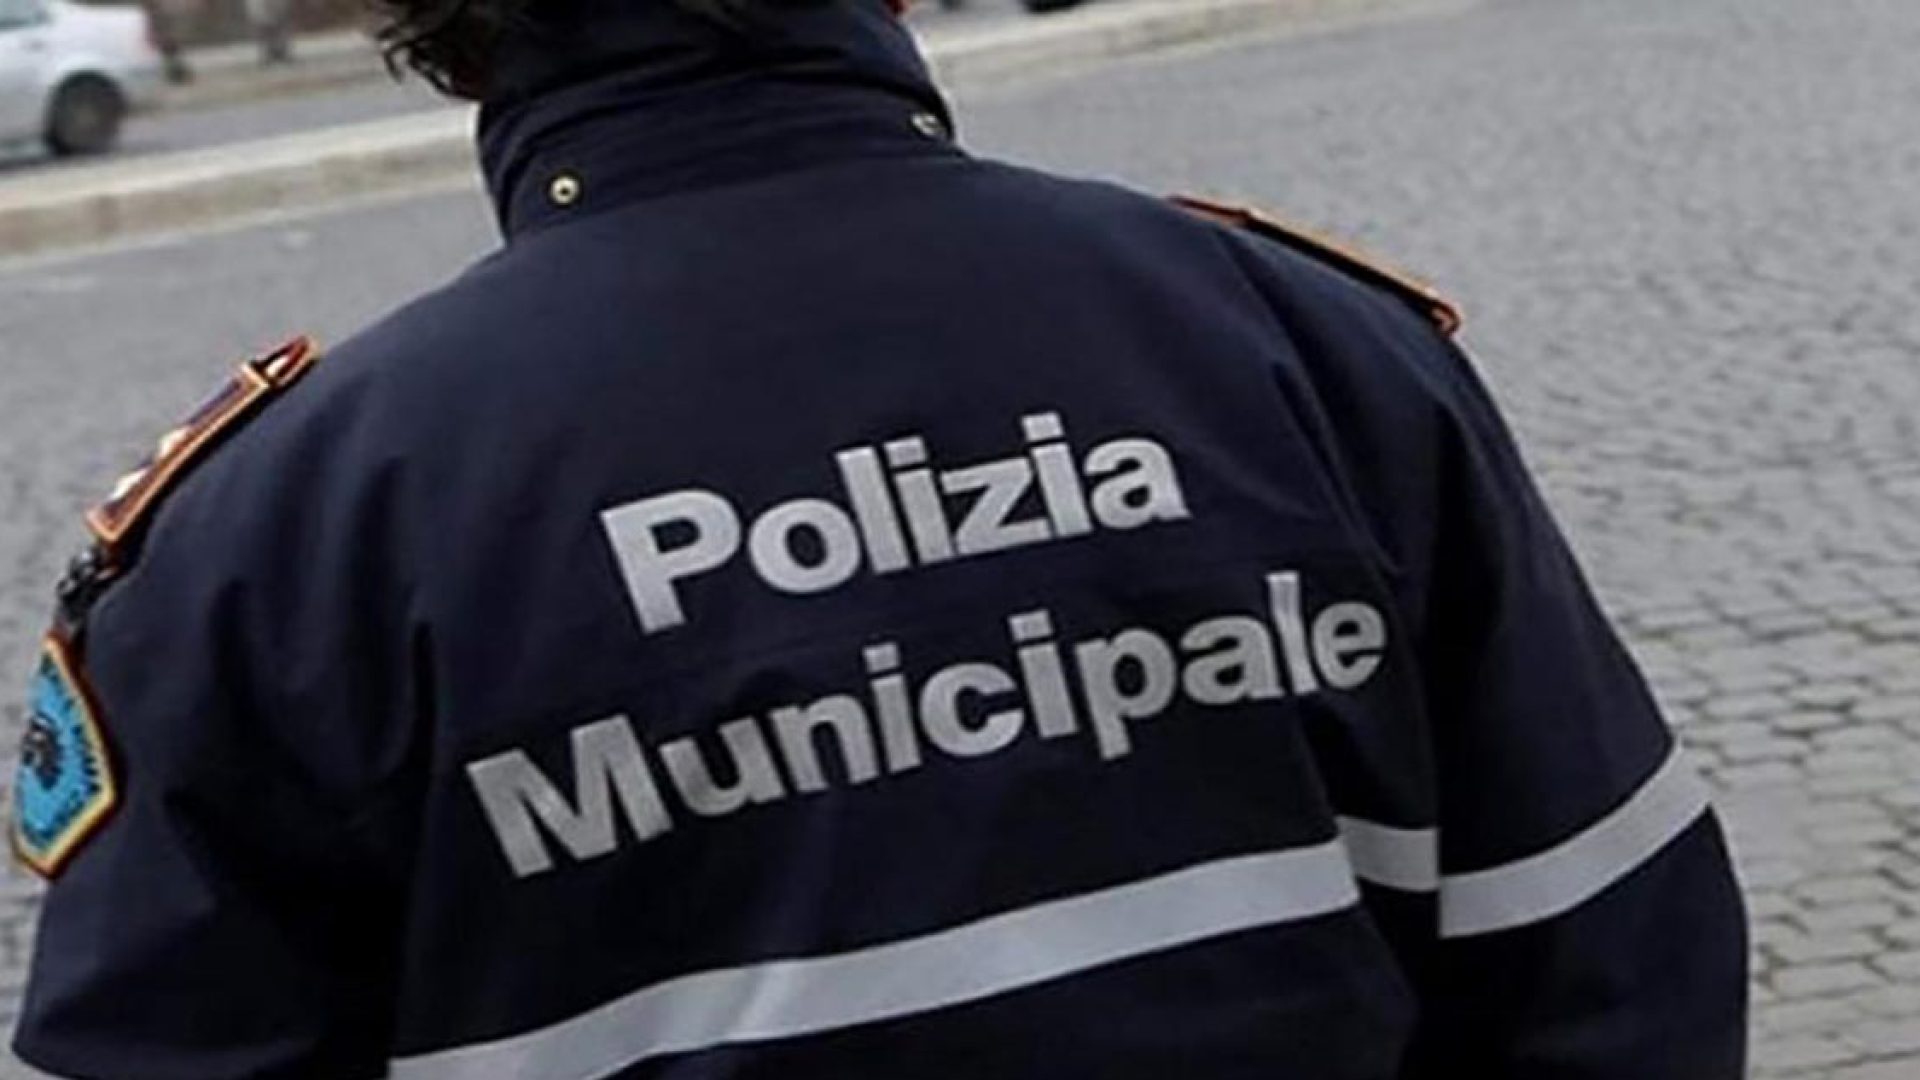 polizia municipale messina_MessinaWebTV_Politica